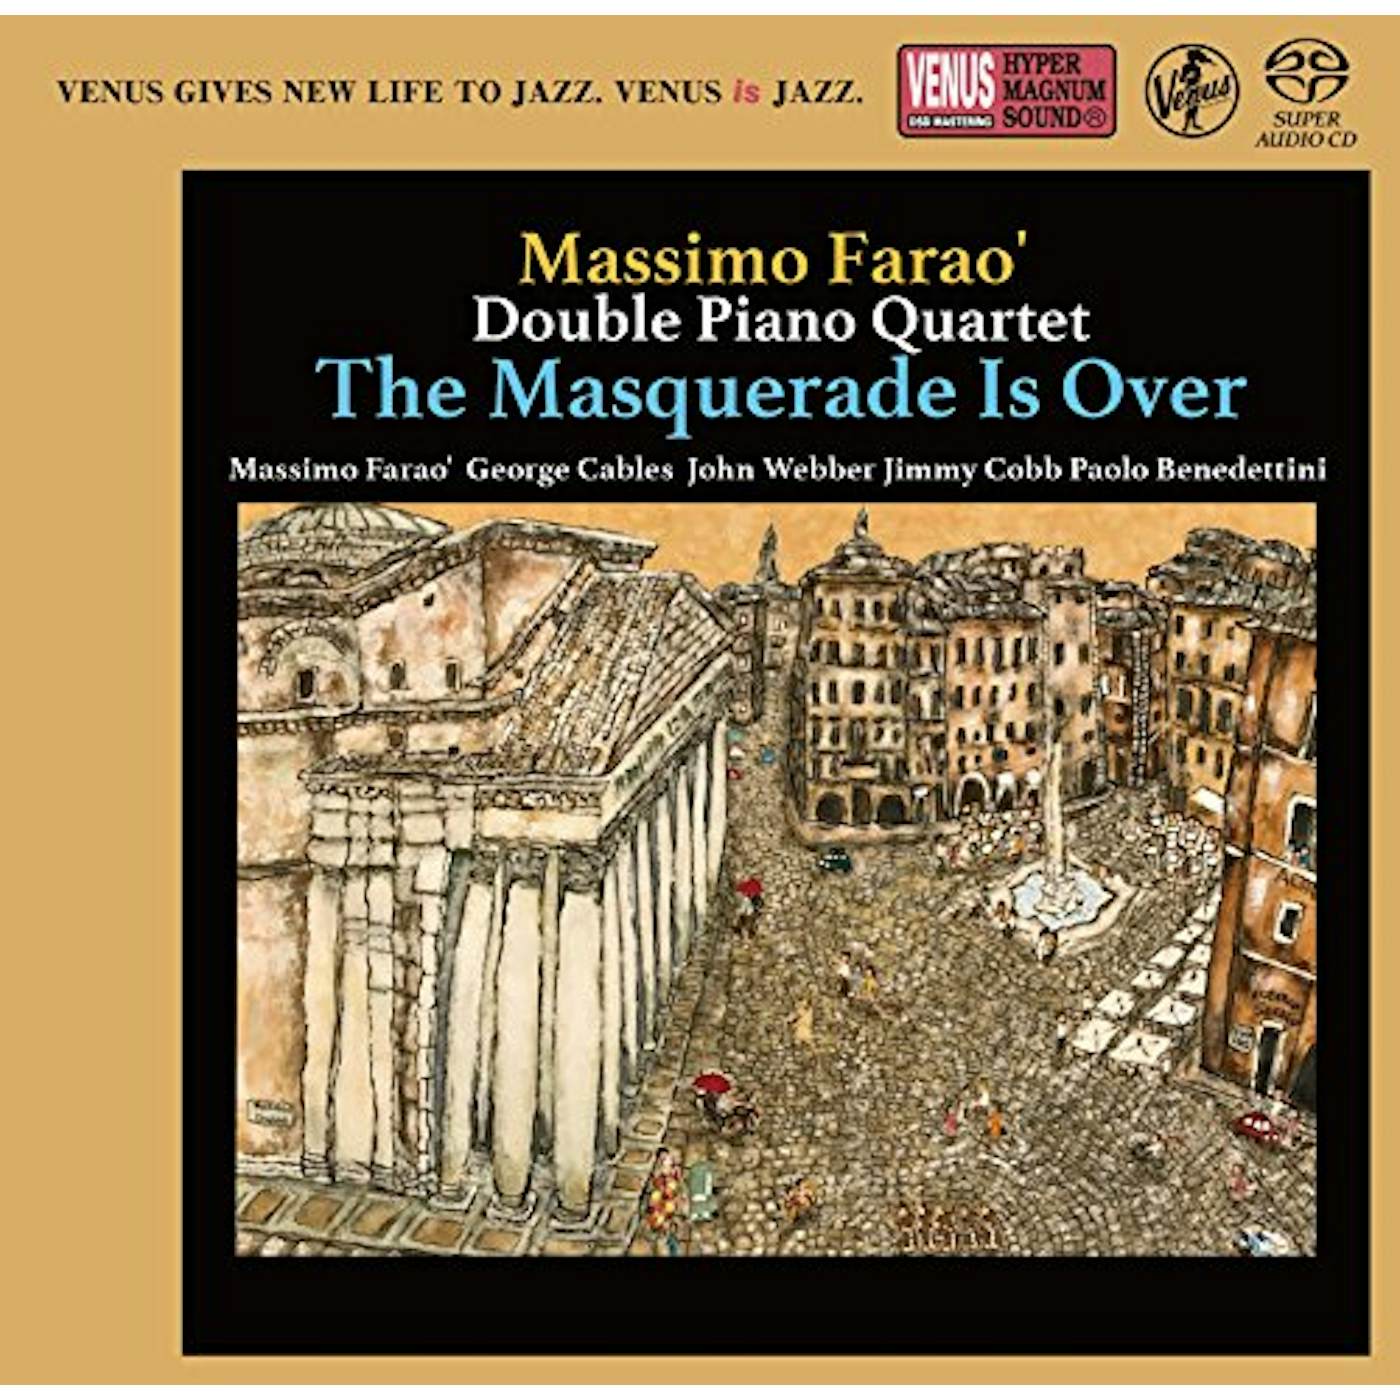 Massimo Faraò MASQUERADE IS OVER CD Super Audio CD